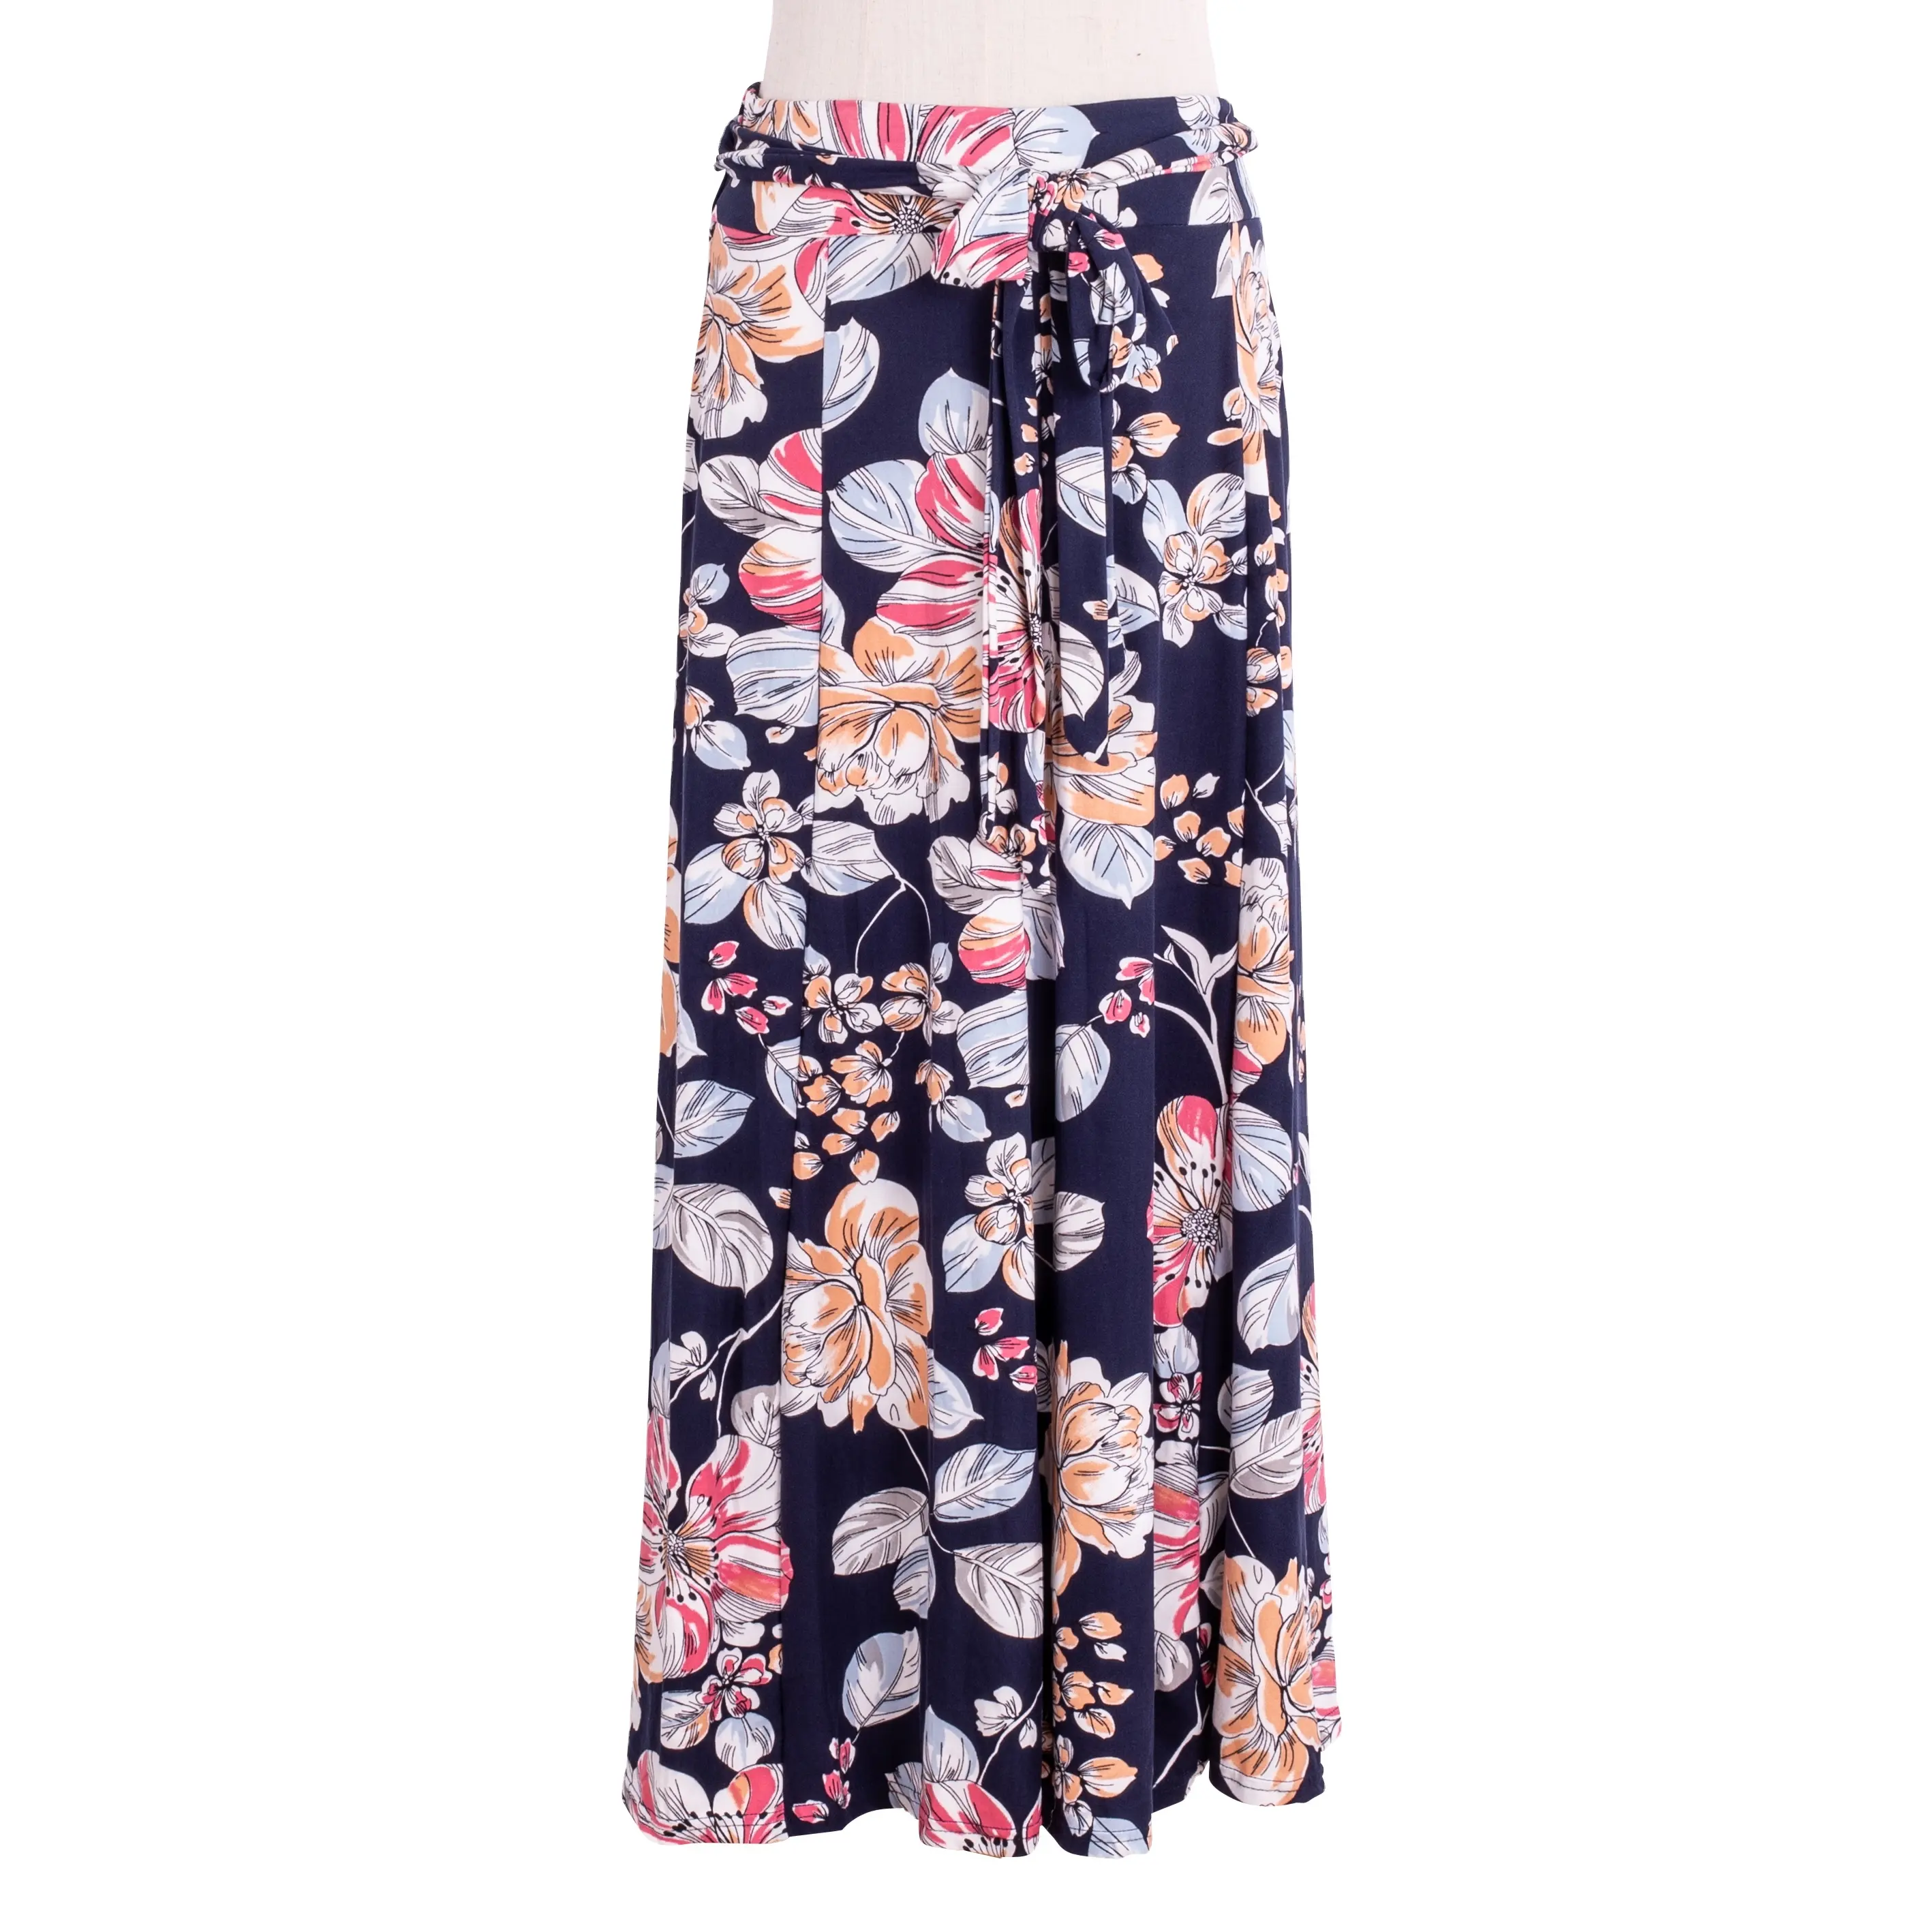 Spring hot-selling European and American ladies print elegant casual drawstring long skirt